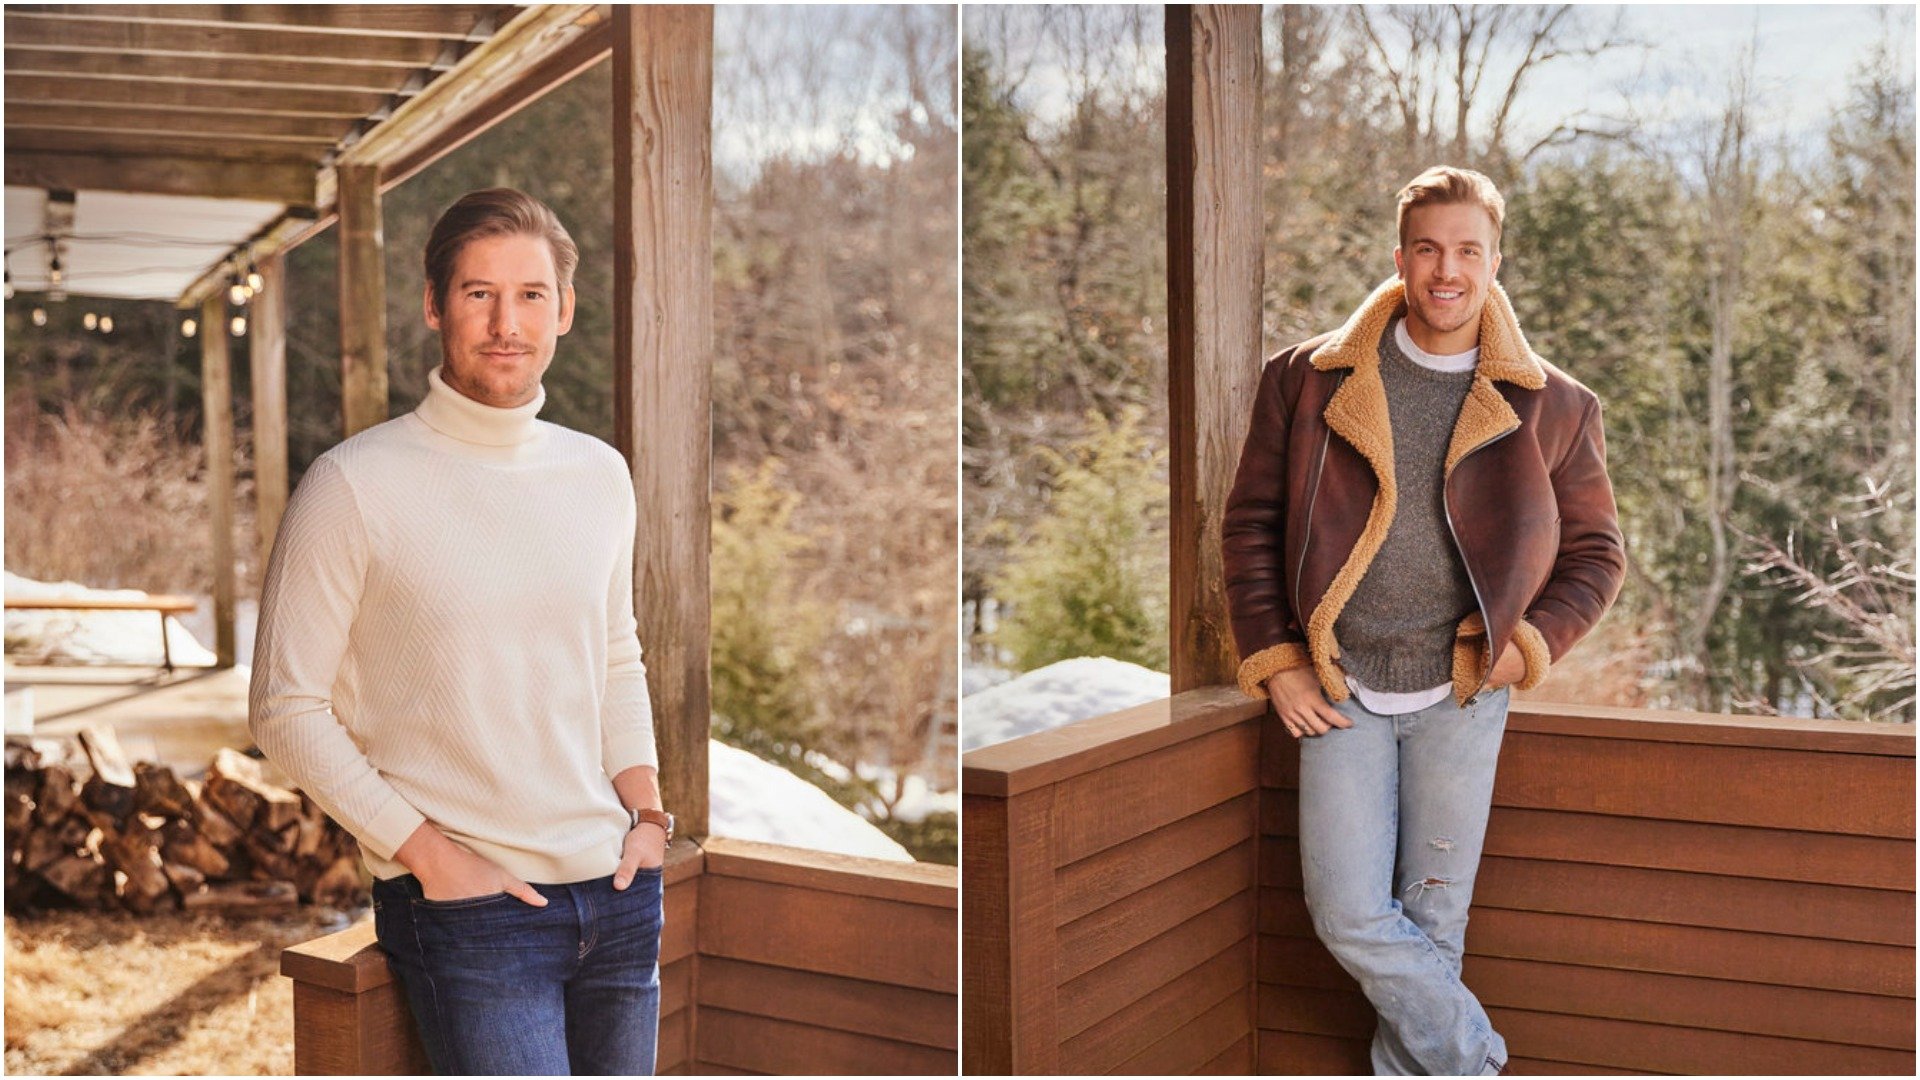 Austen Kroll and Luke Gulbranson pose for 'Winter House' promotional shots.